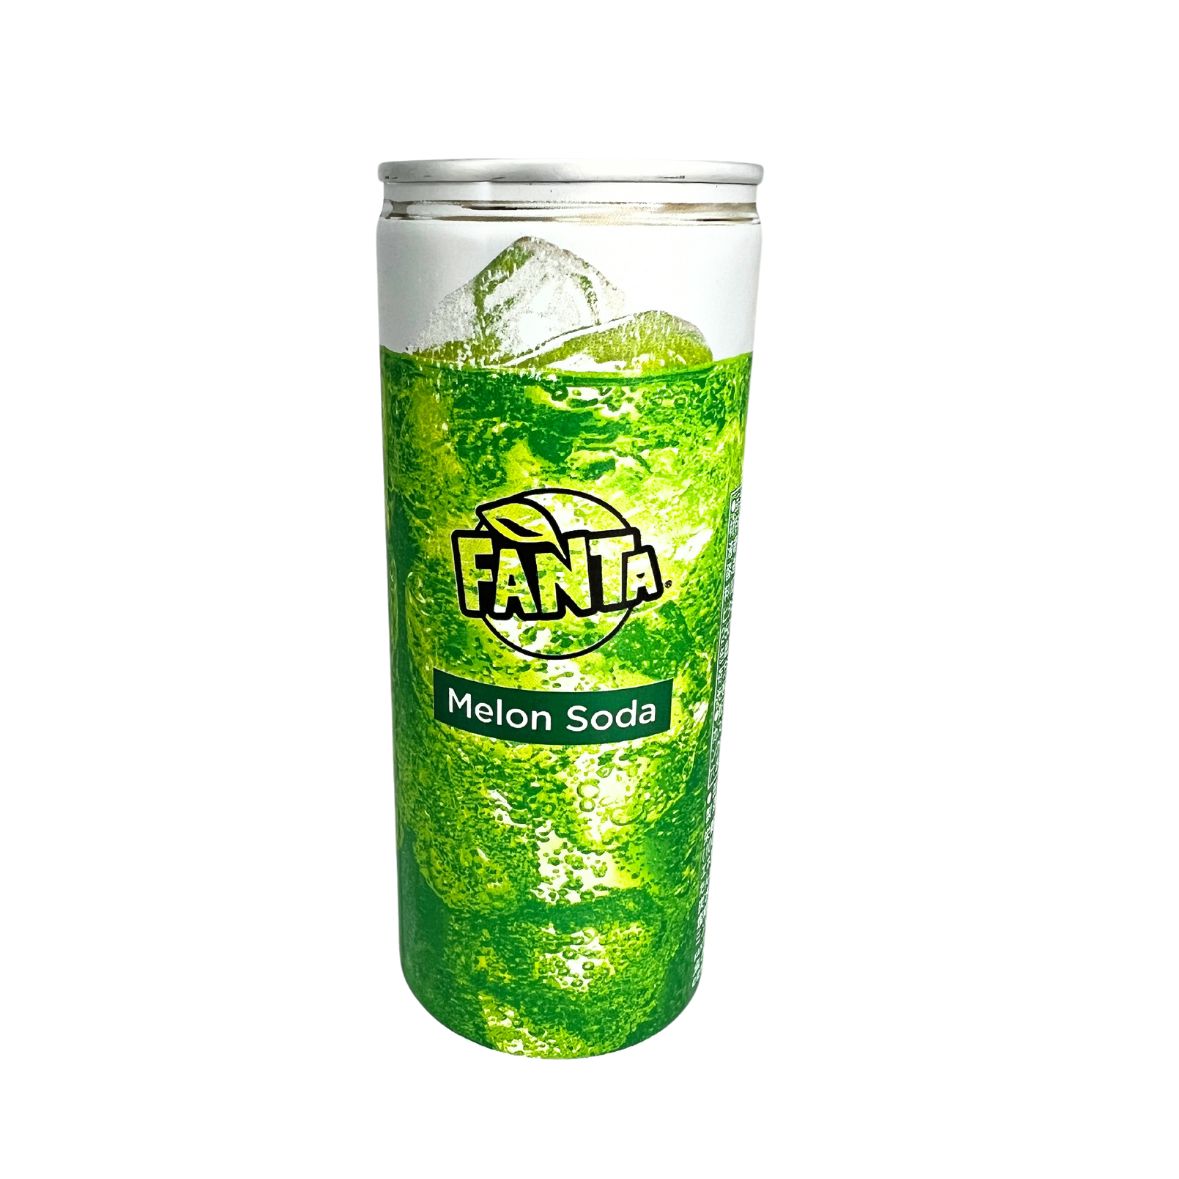 Fanta - Melon Soda (Japan)